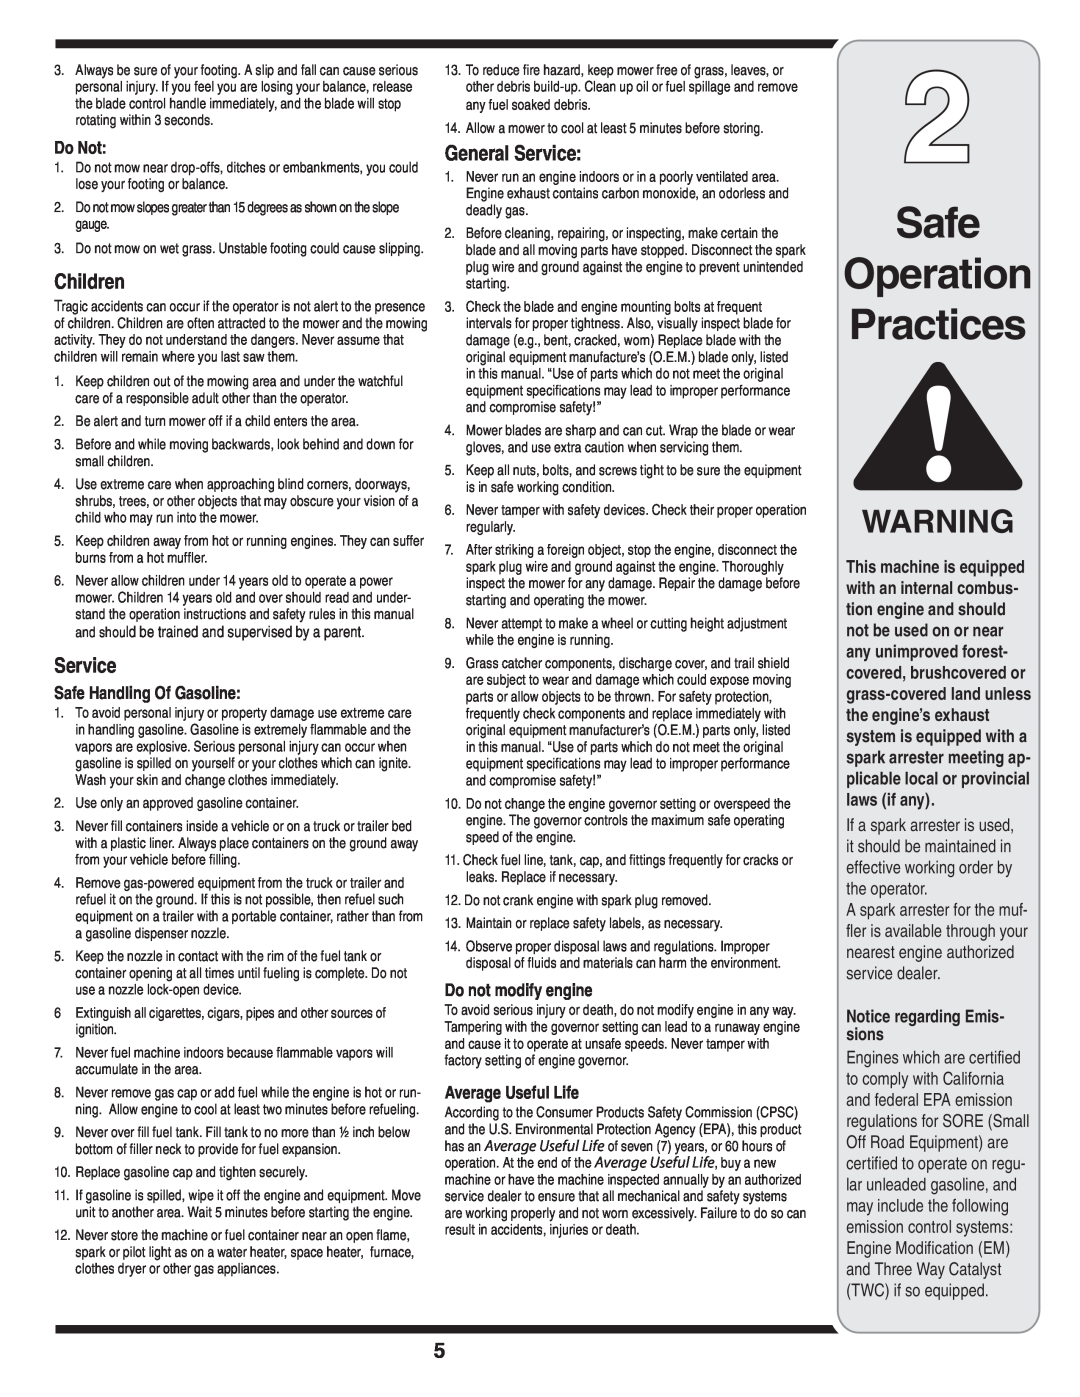 Troy-Bilt Series 100 warranty Safe Operation Practices, Do Not, Safe Handling Of Gasoline, Do not modify engine 